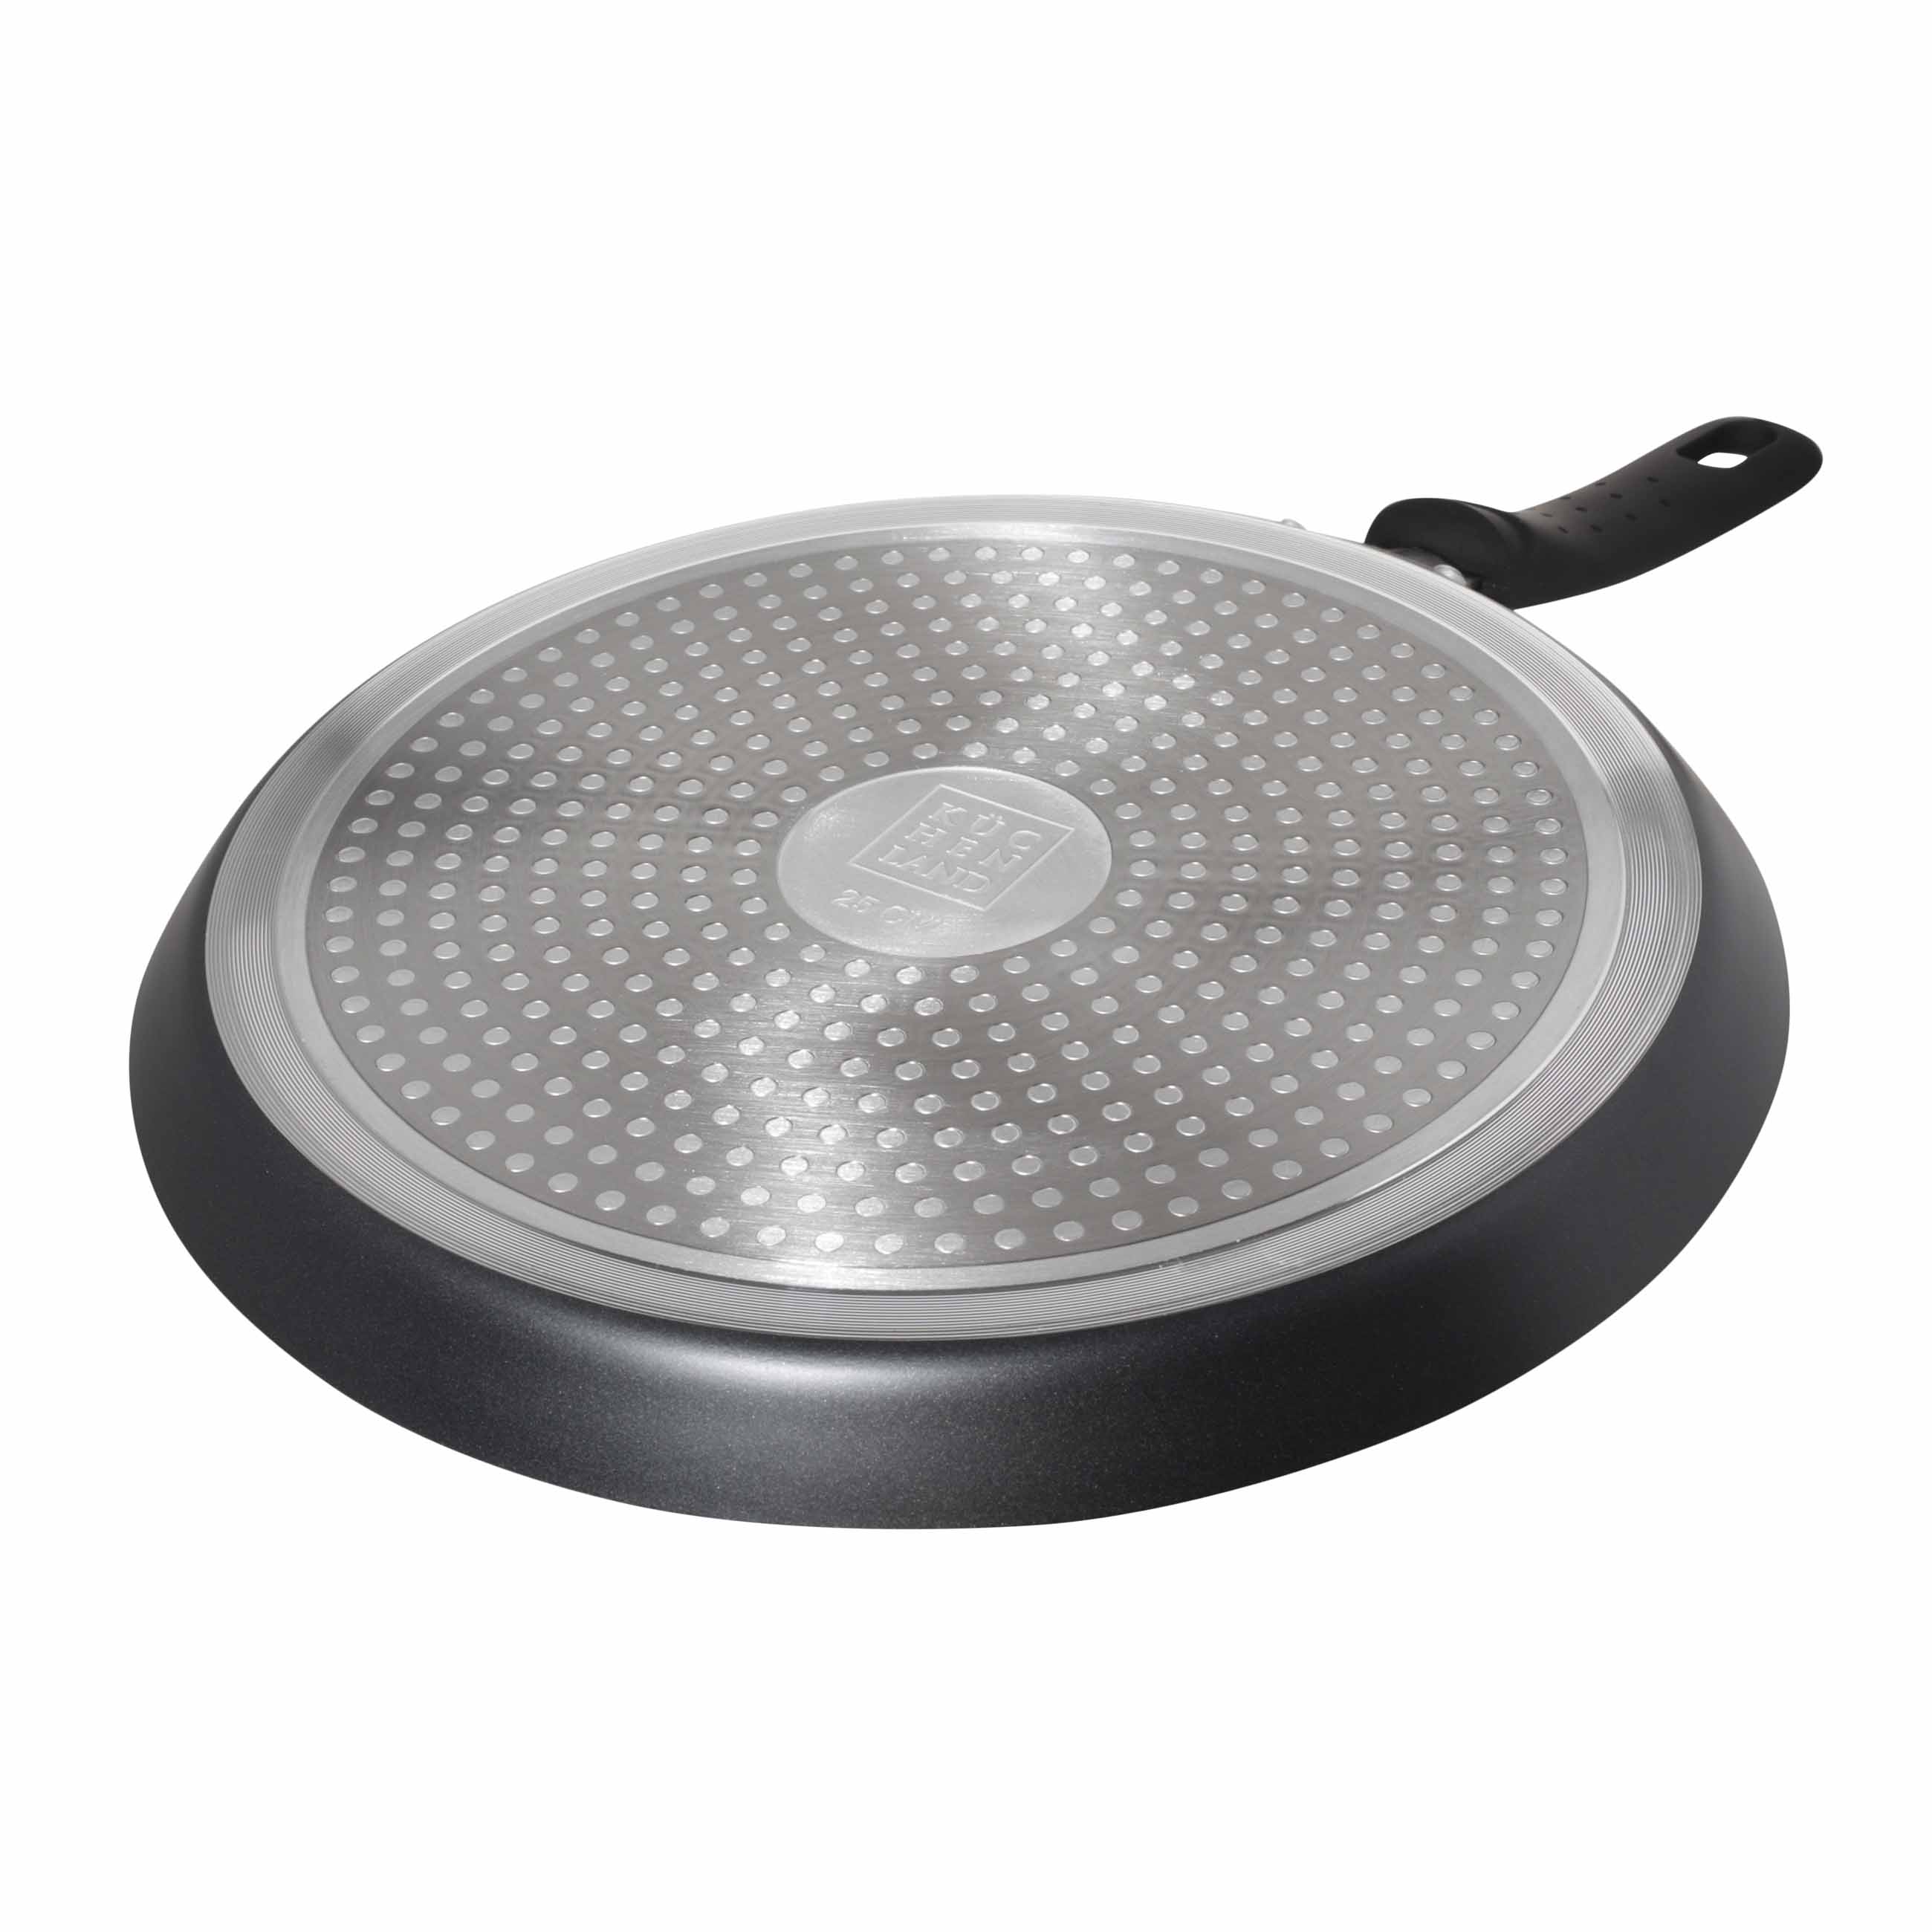 Pancake pan, 25 cm, coated, aluminum, black, Crepe изображение № 3